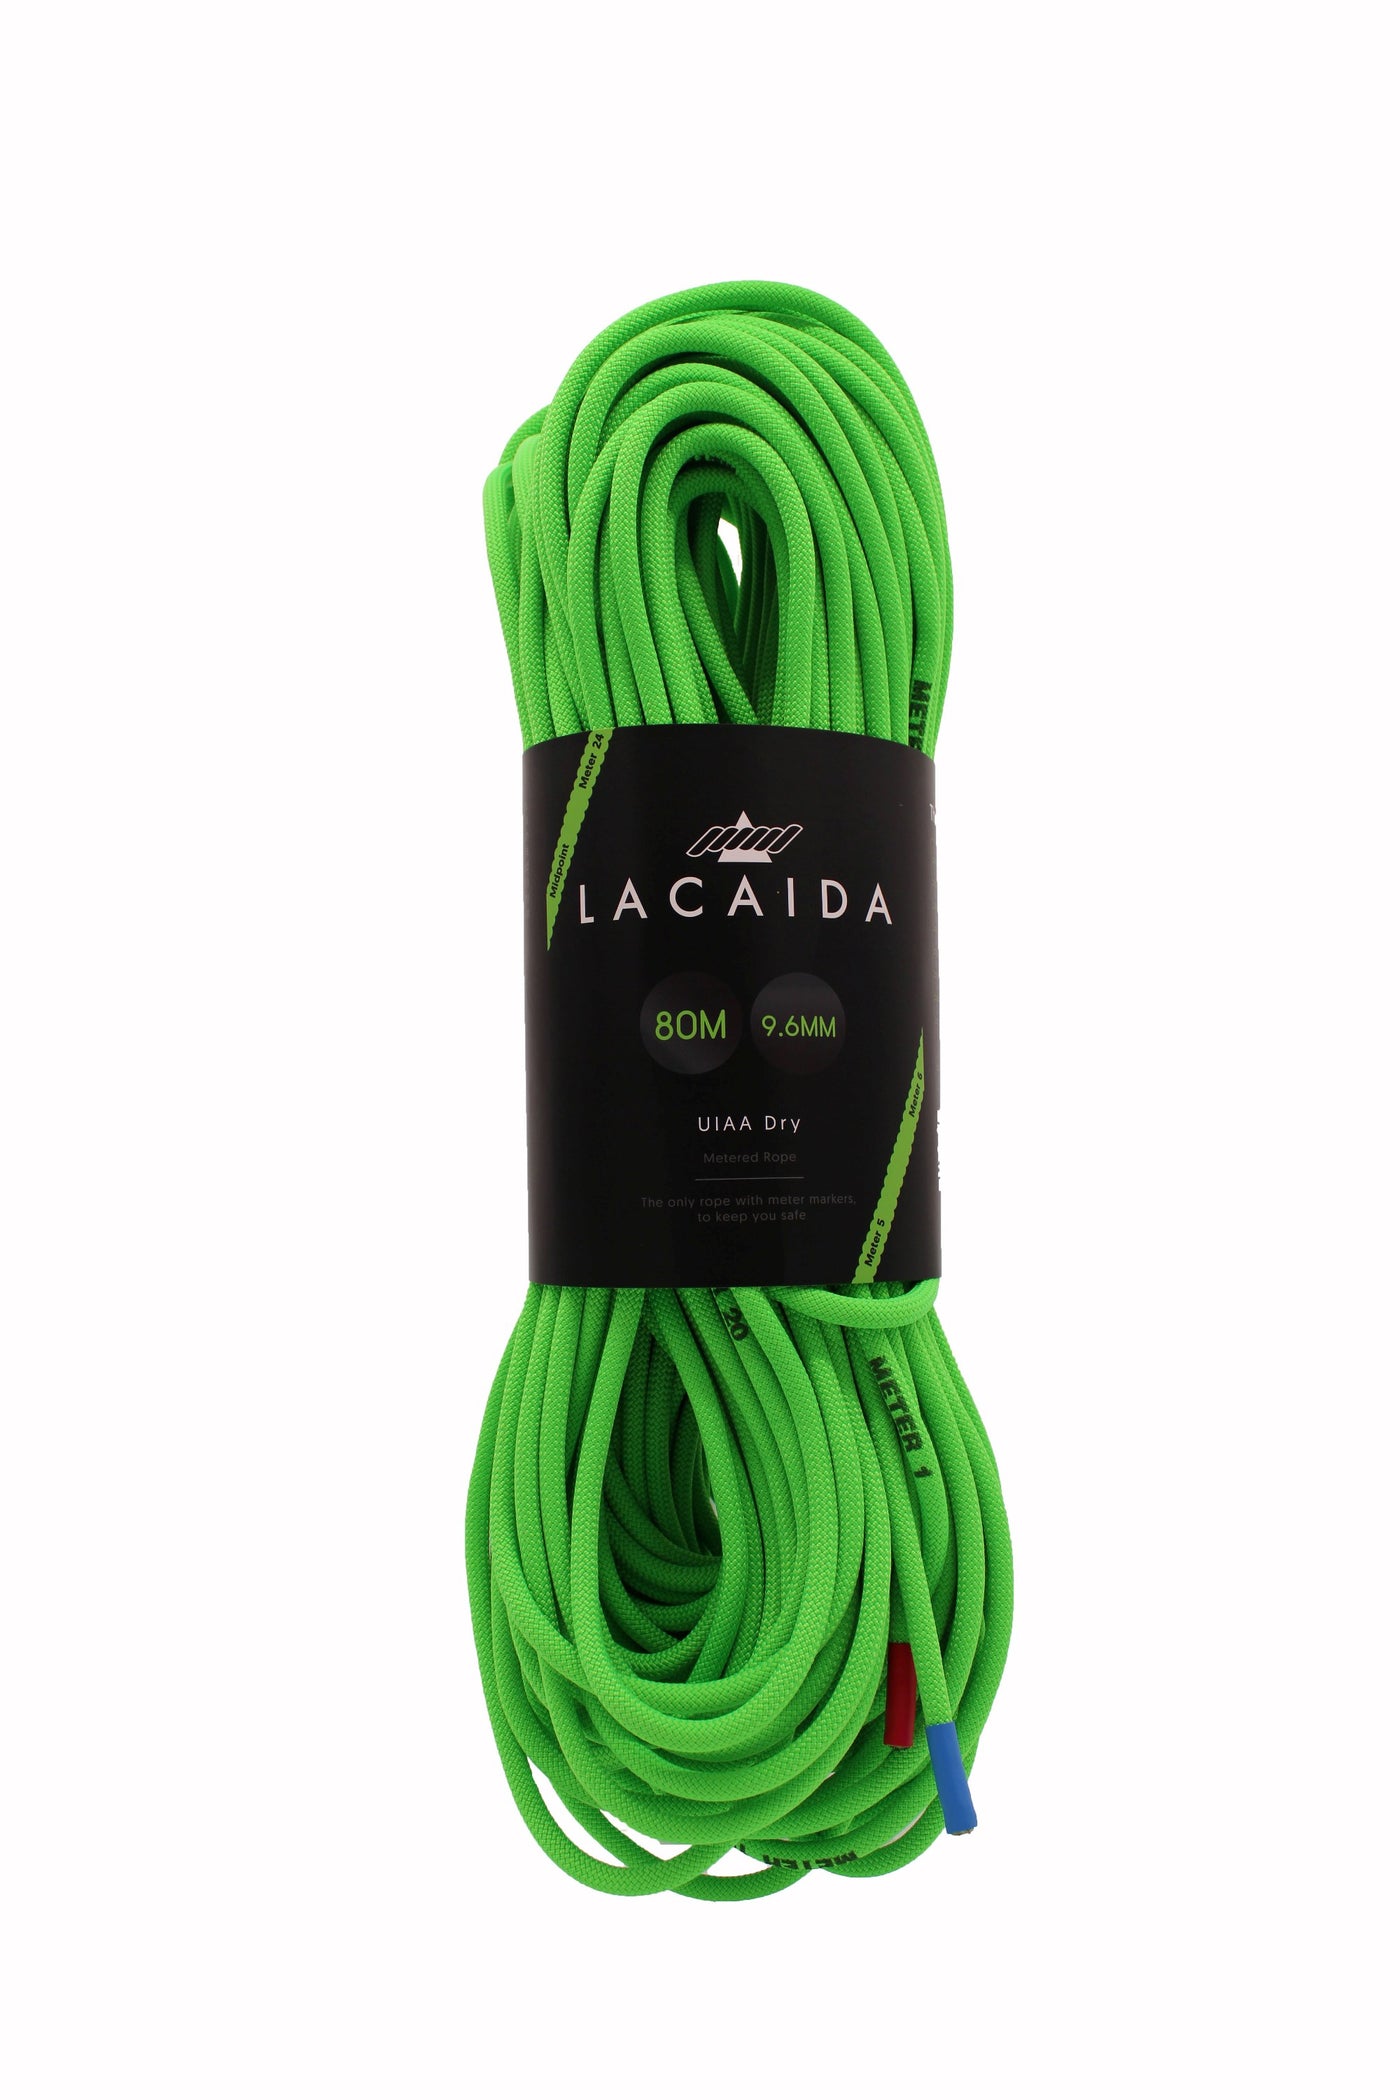 Lacaida Metered Rope, The Fern – Lacaidaropes